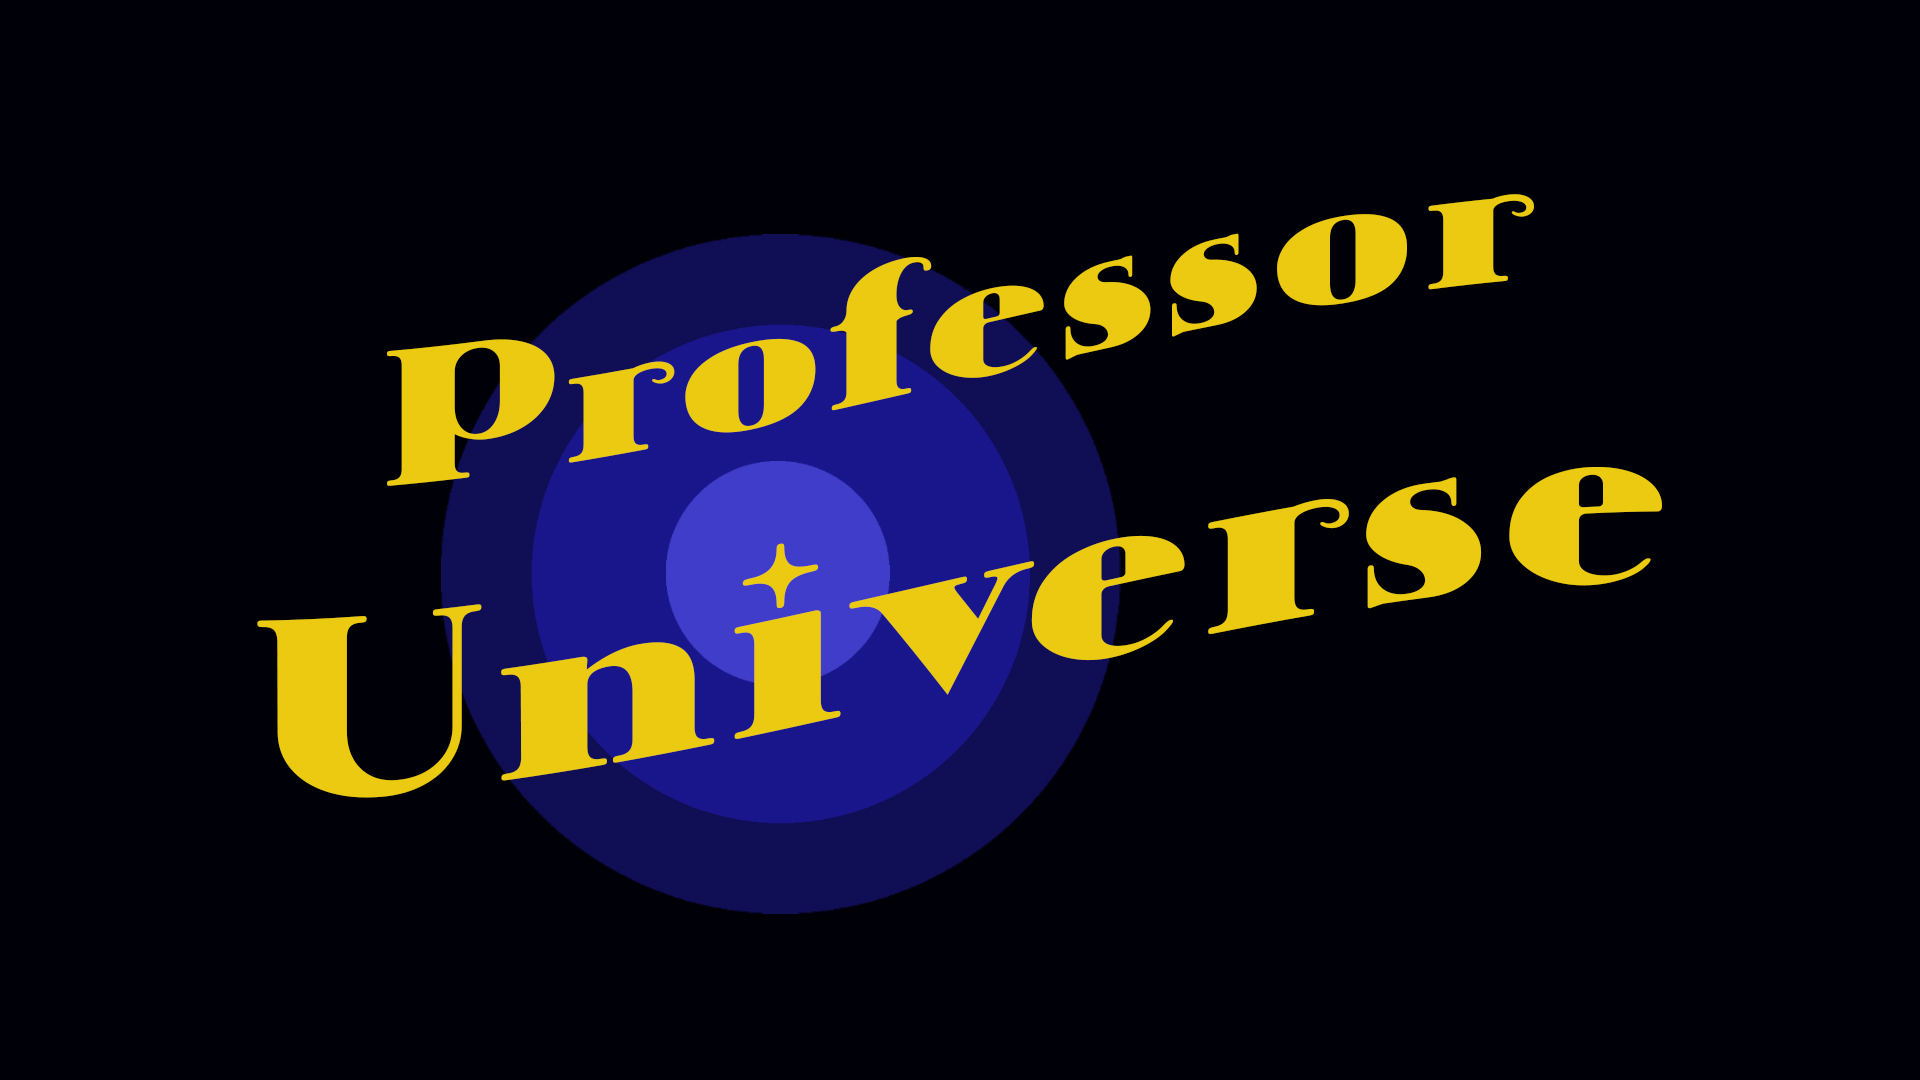 Professor Universe